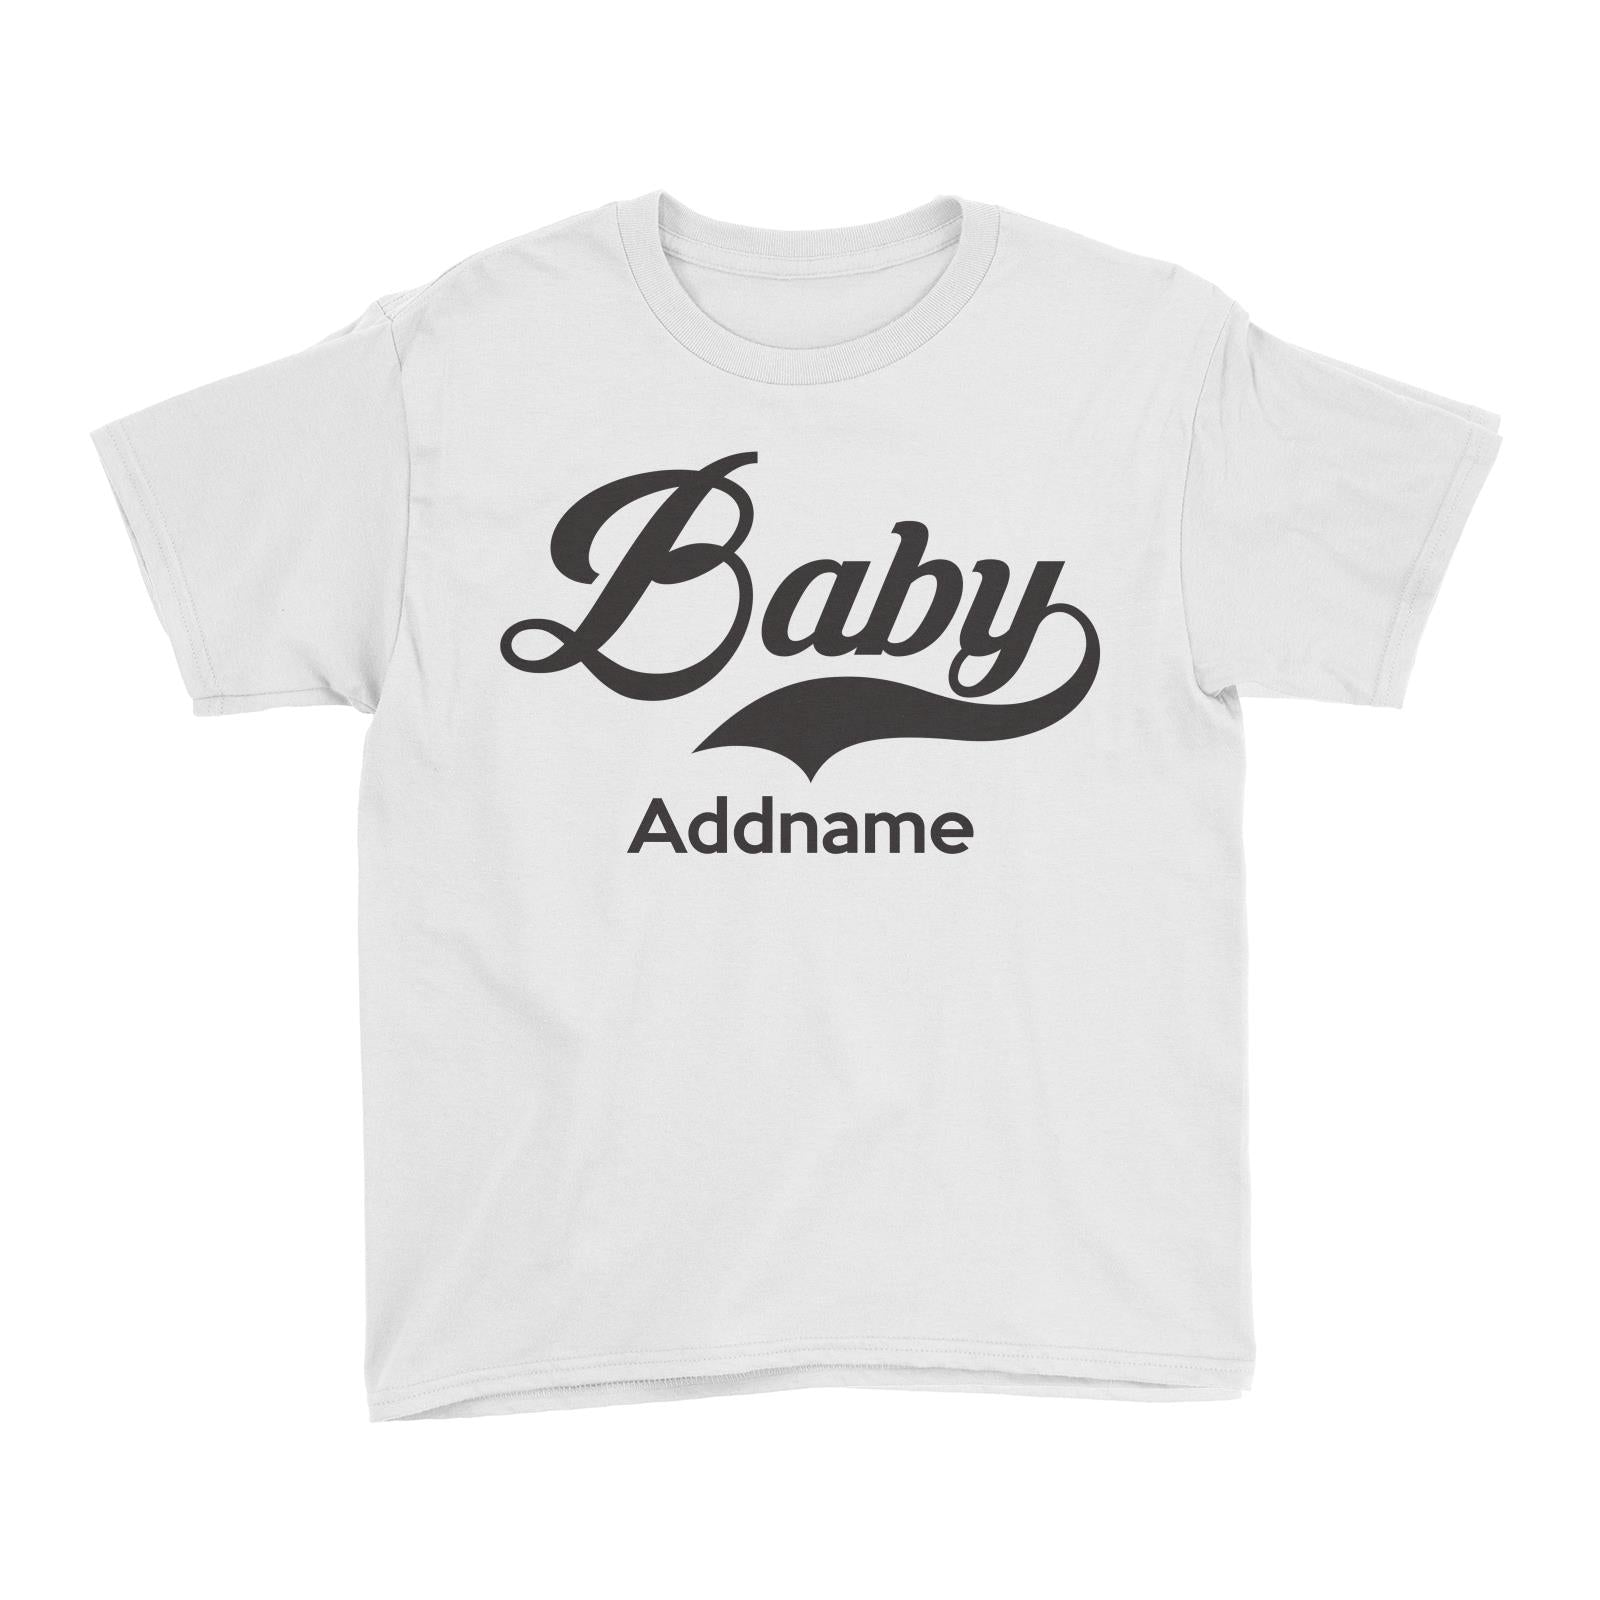 Retro Baby Addname Kid's T-Shirt